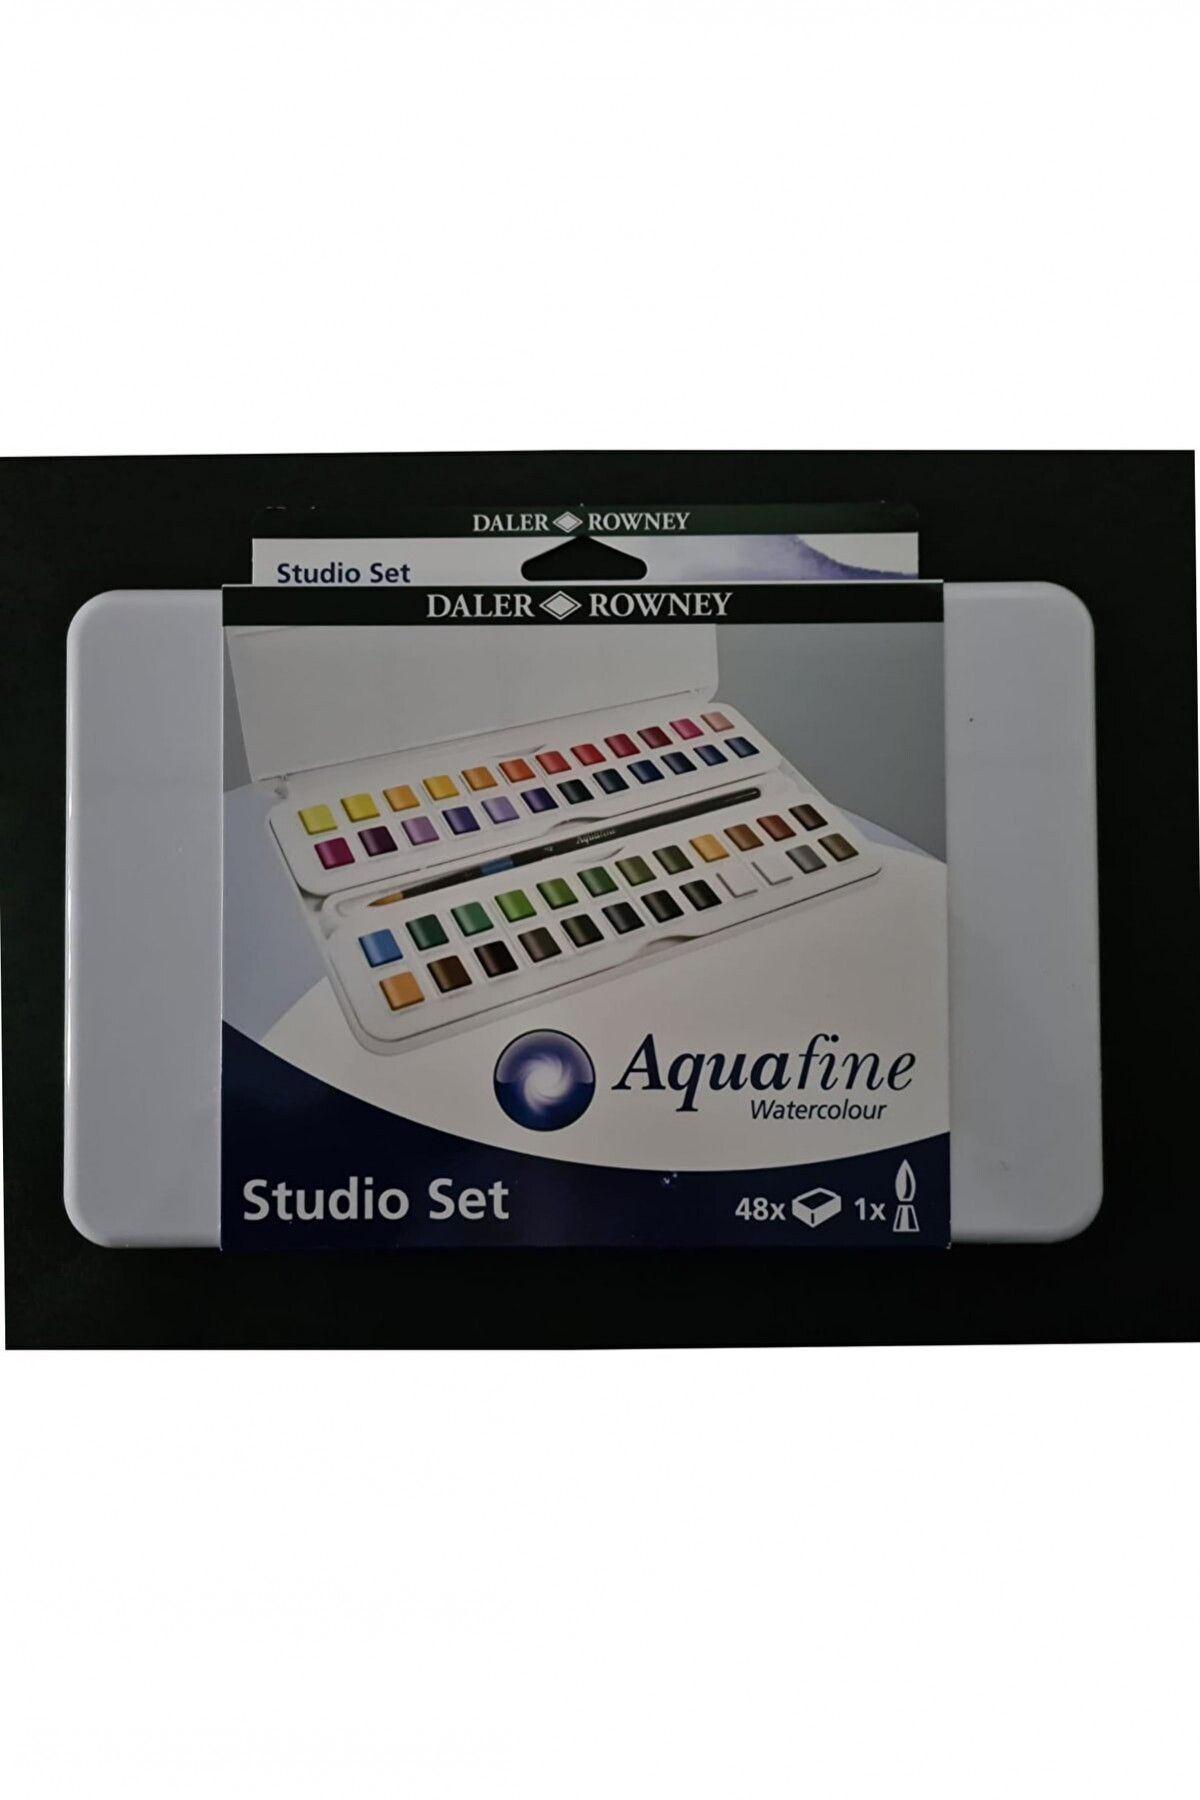 Daler Rowney Aquafine Watercolor Studio Set